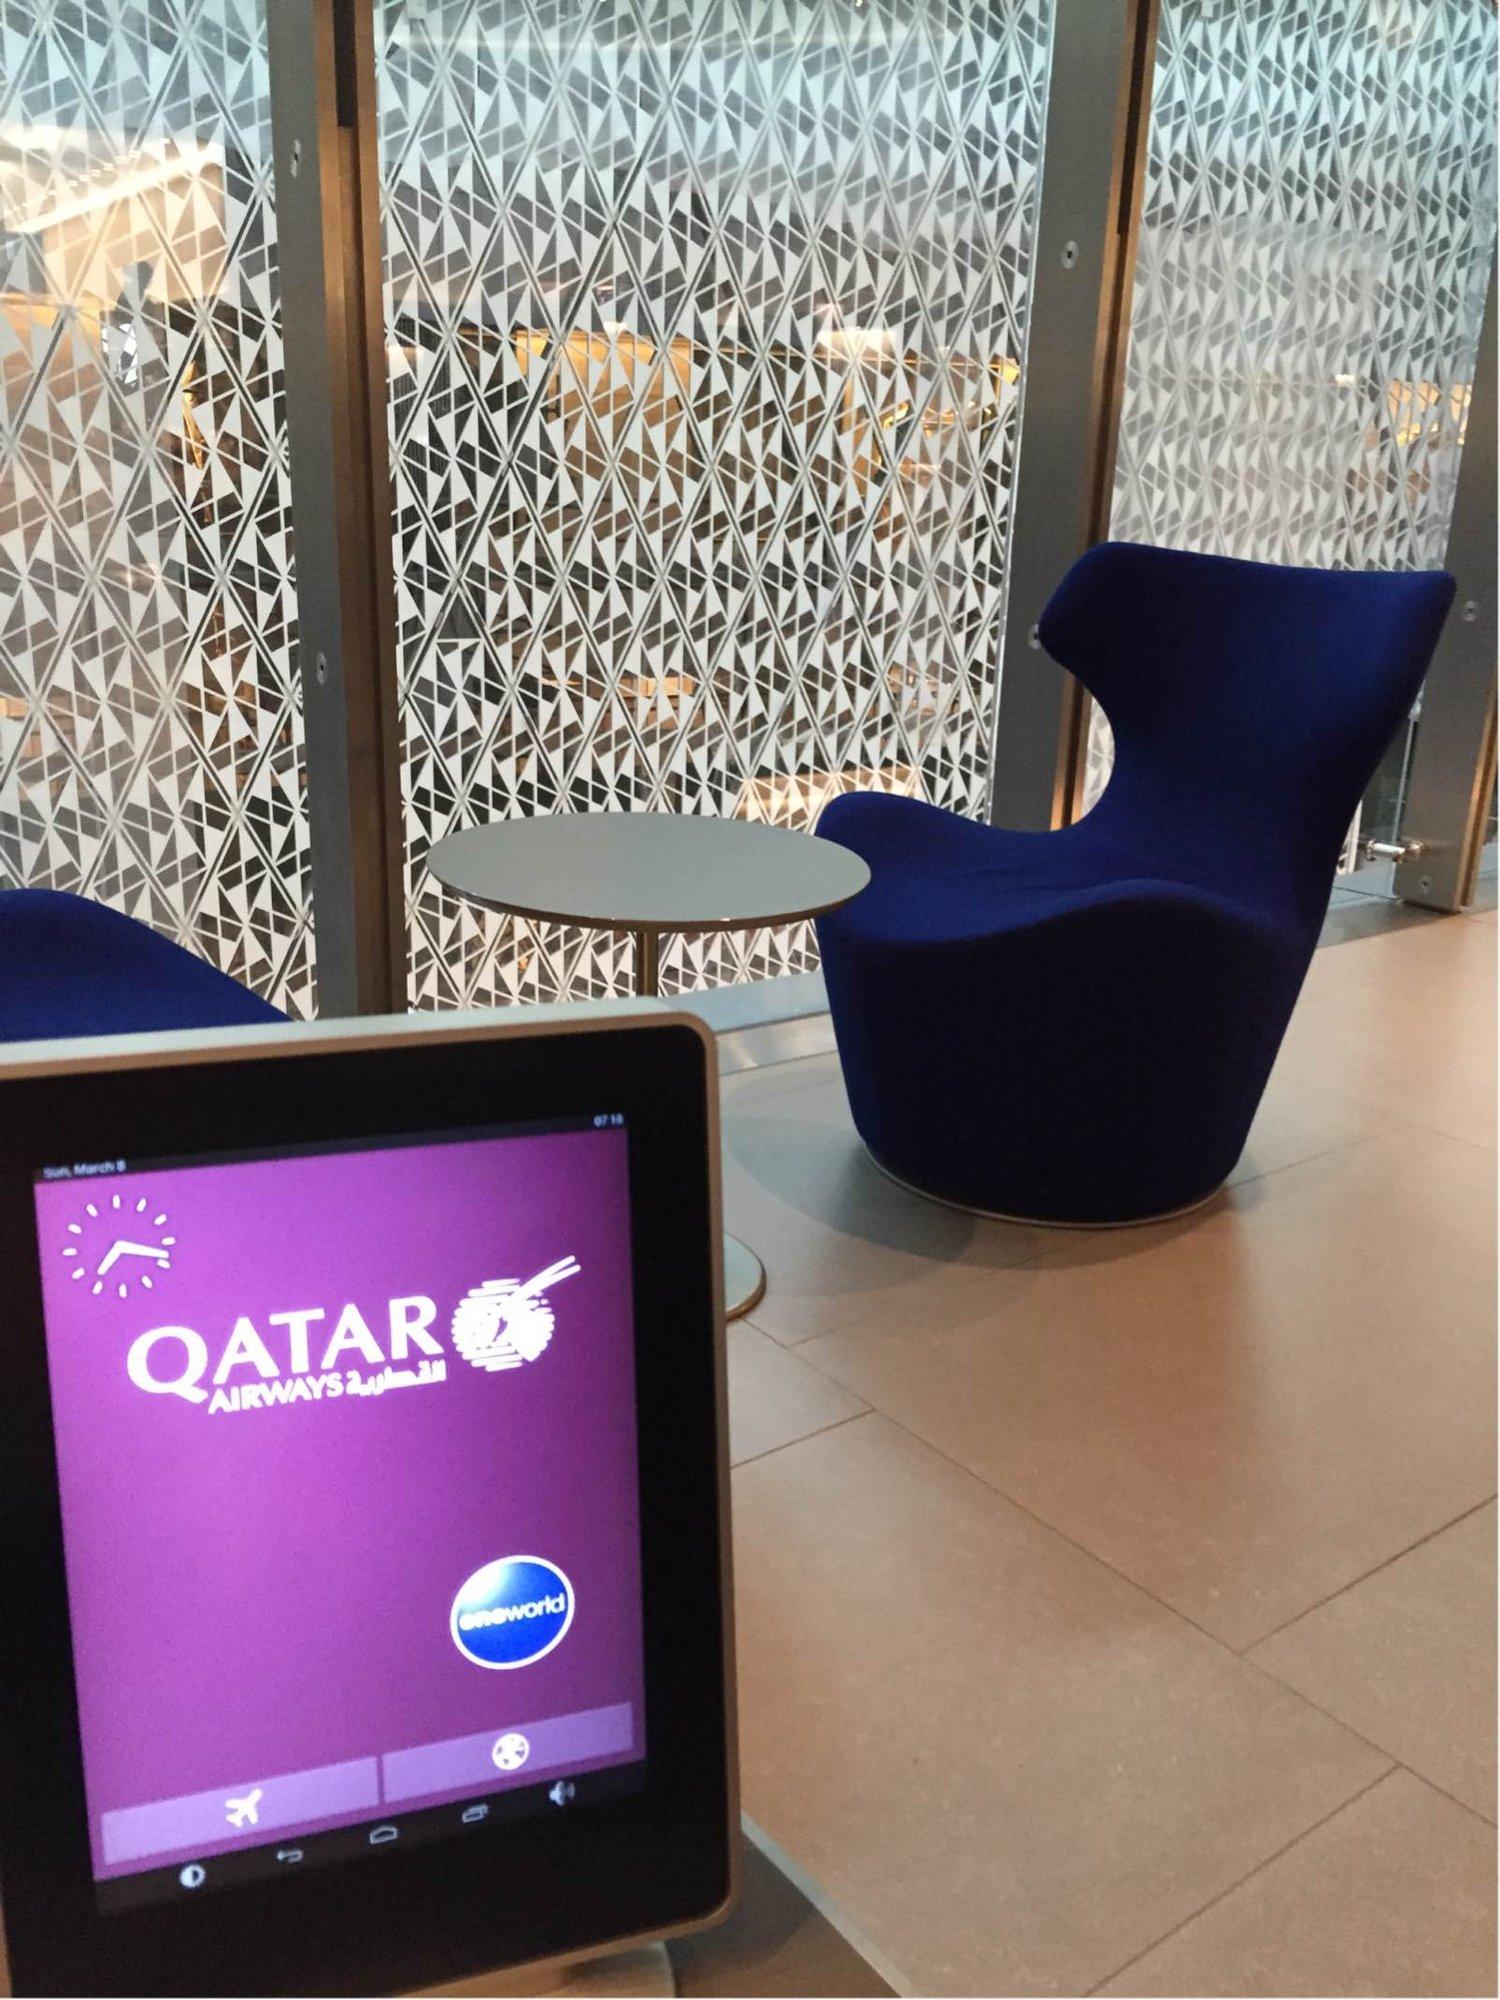 Qatar Airways Al Mourjan Business Class Lounge image 35 of 100